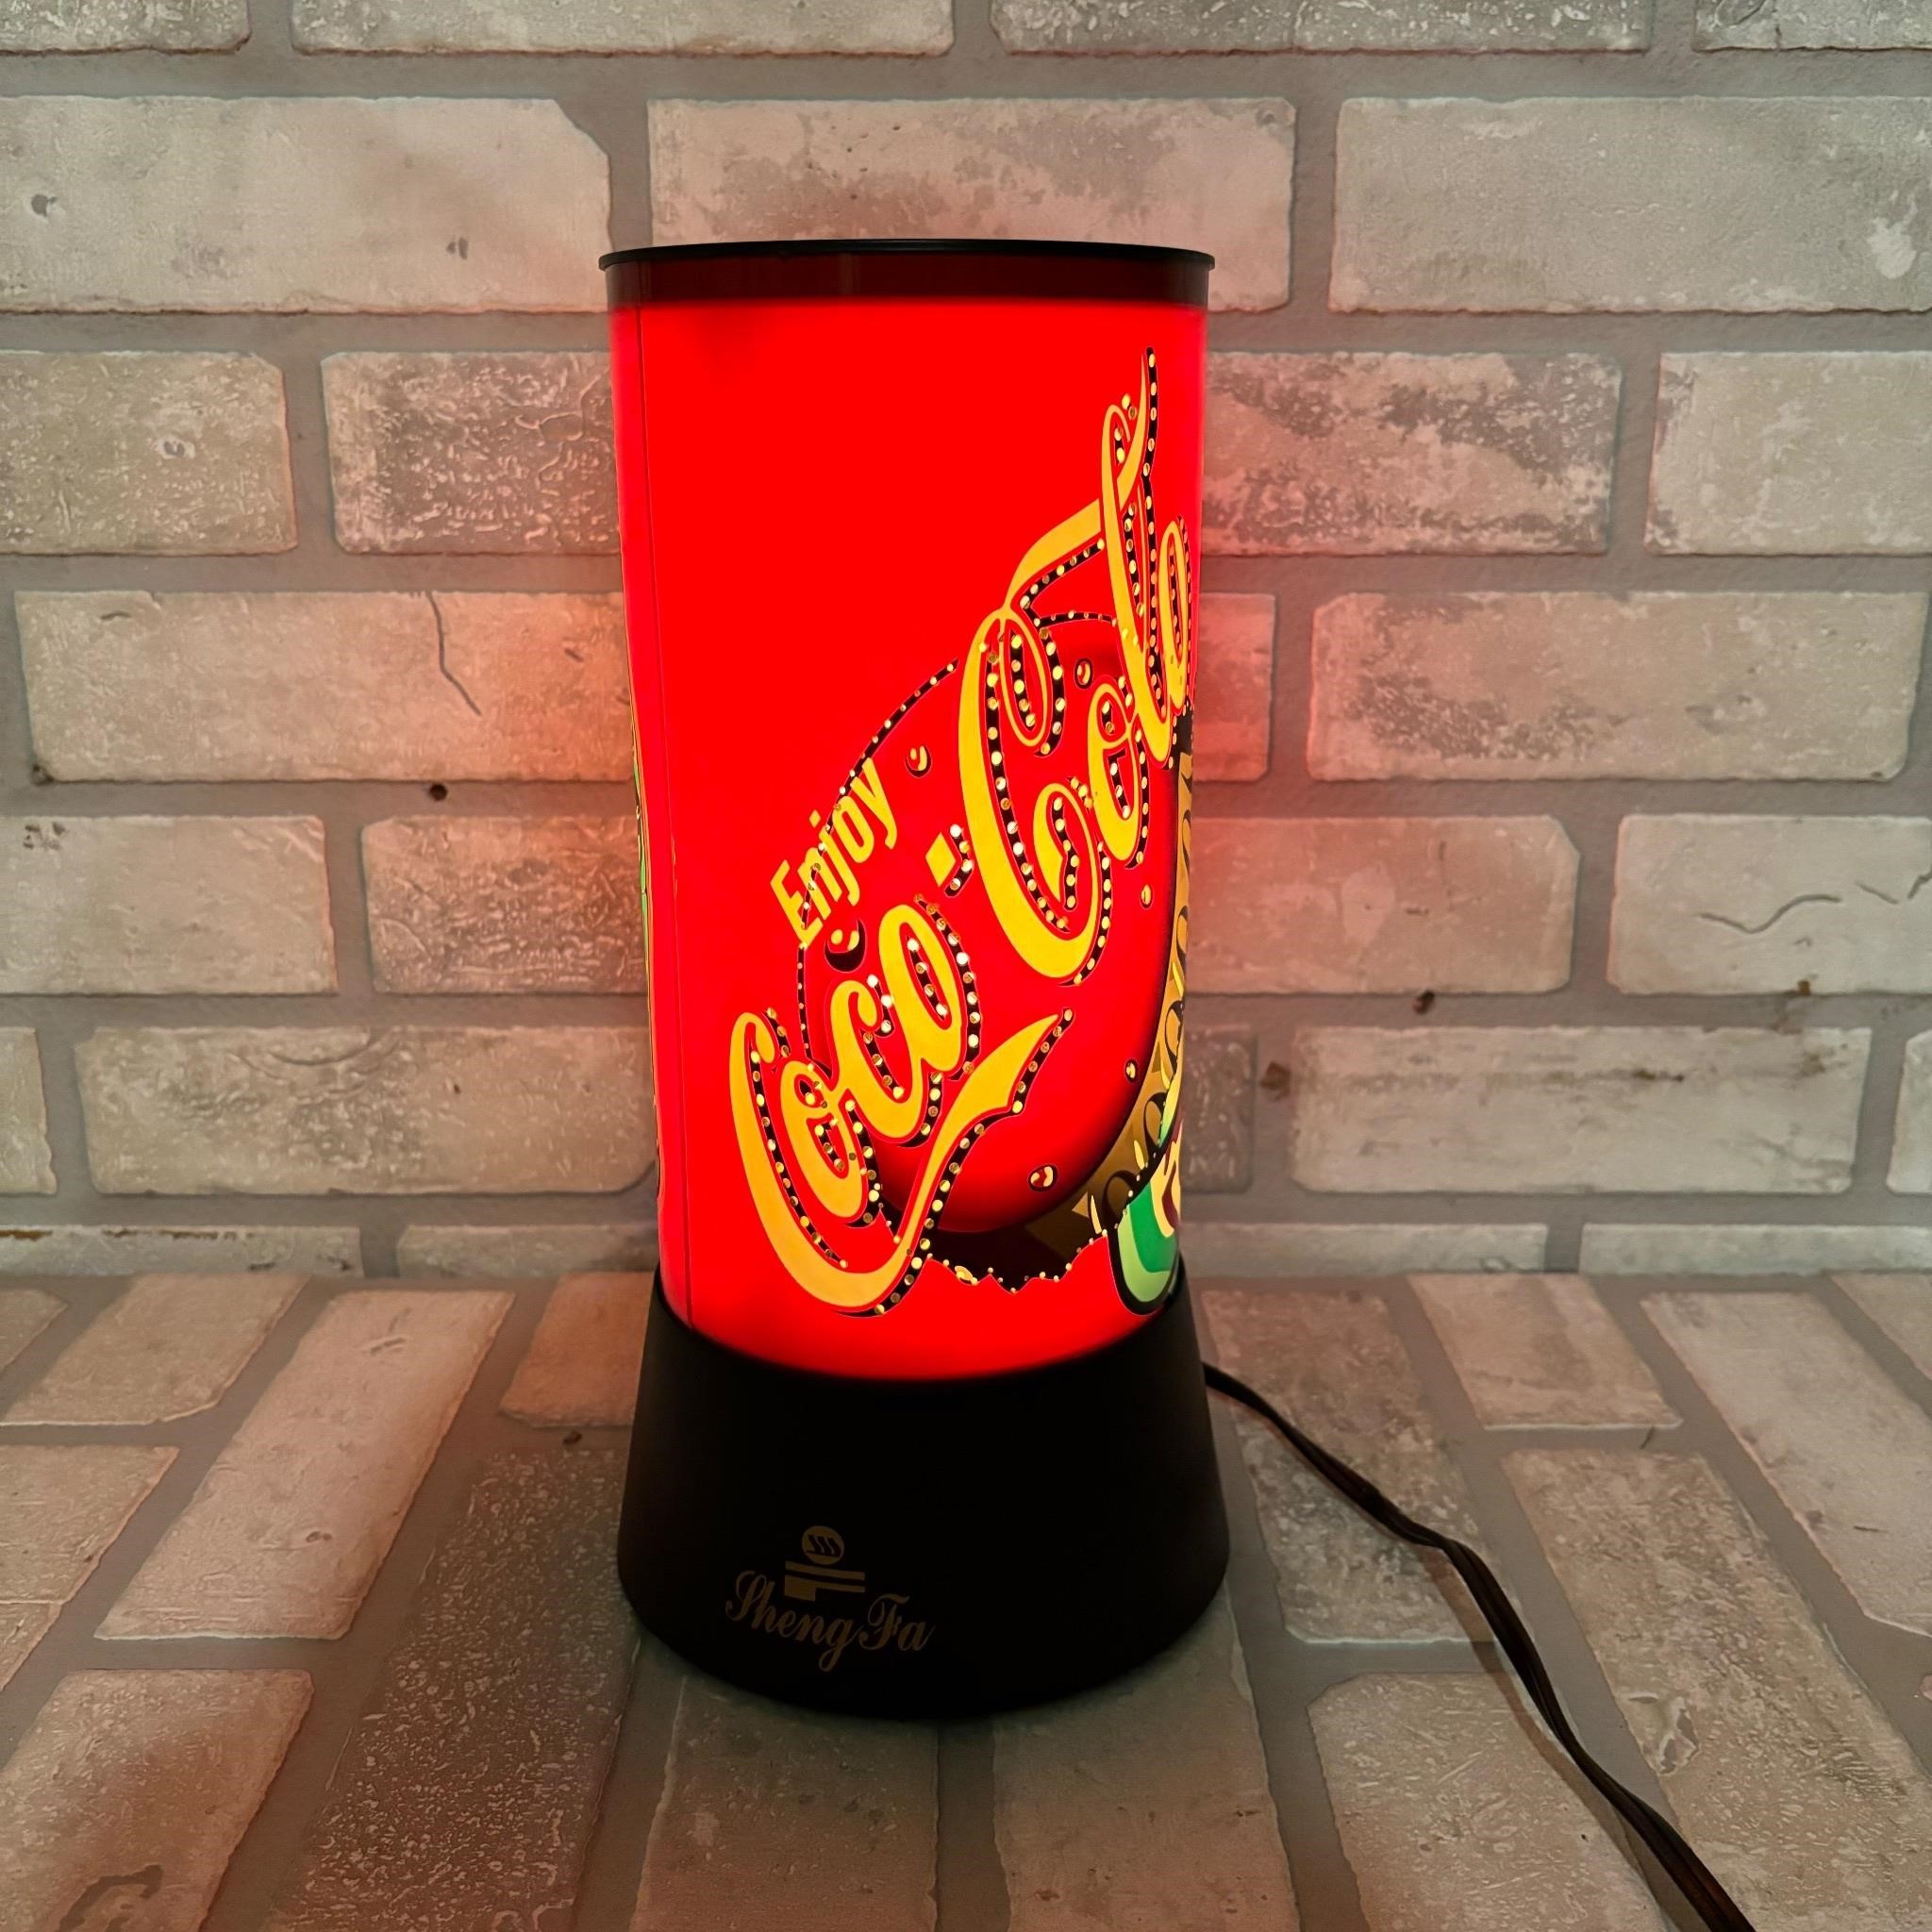 Coca-Cola "Bubble" Motion Lamp